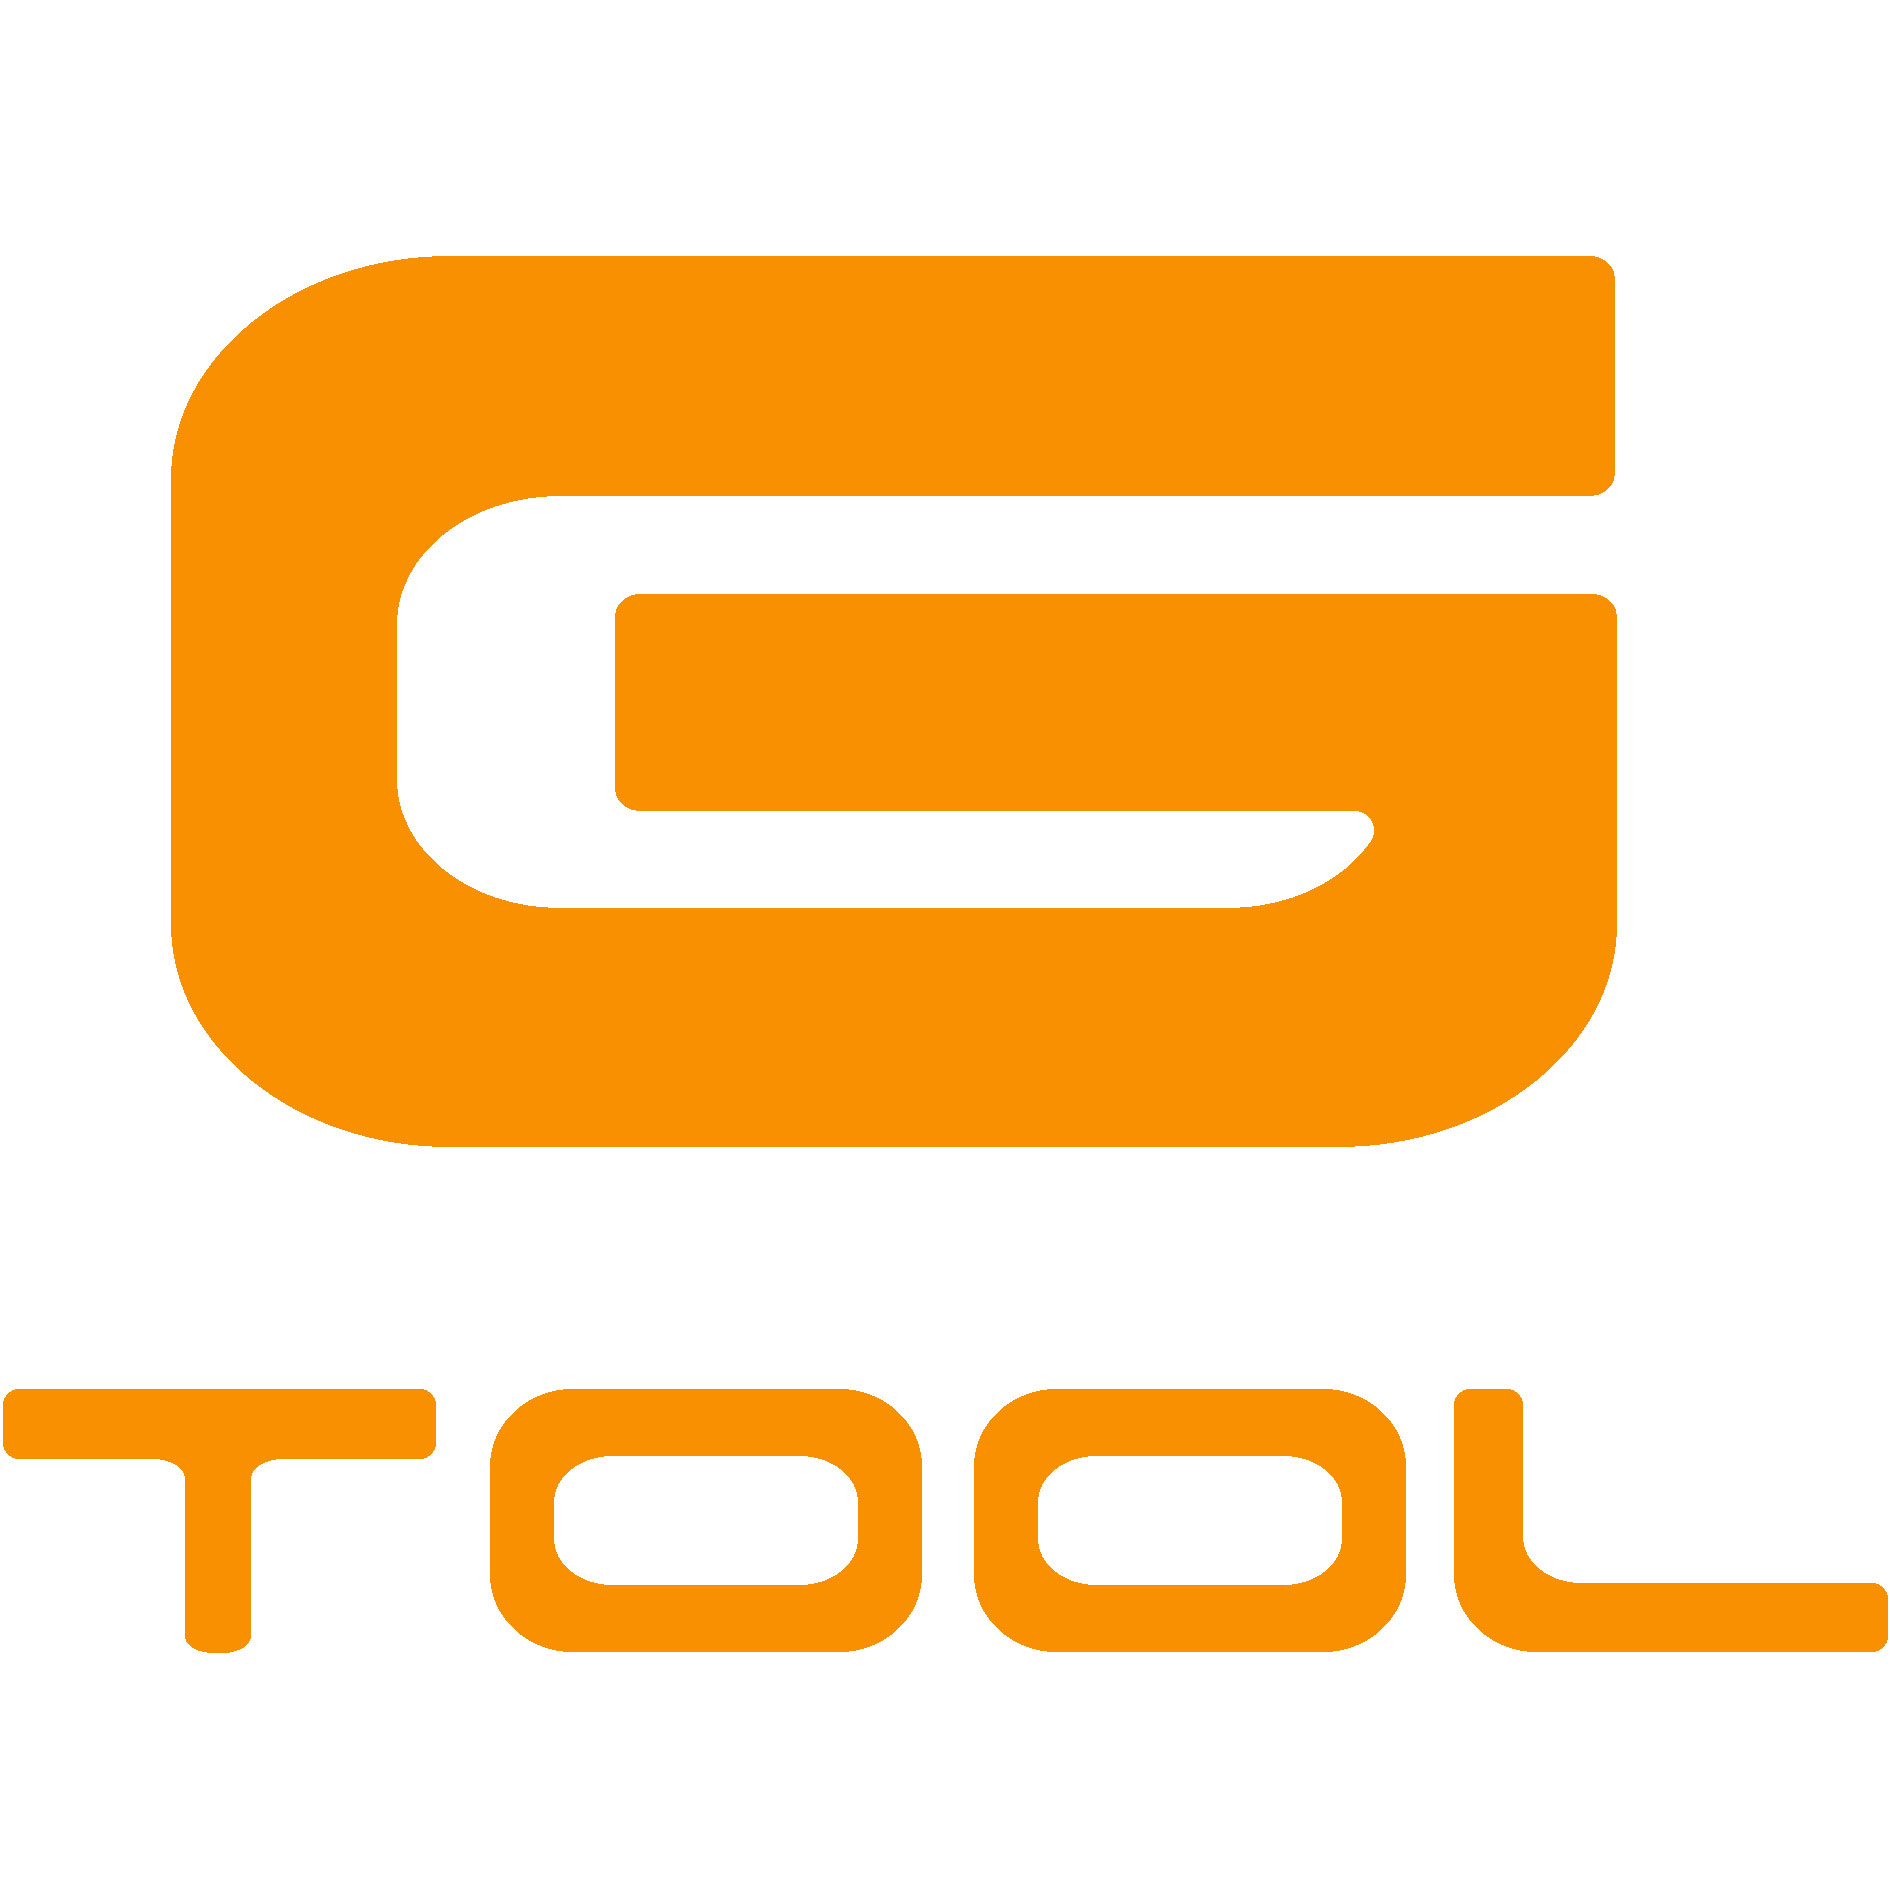 g-tool